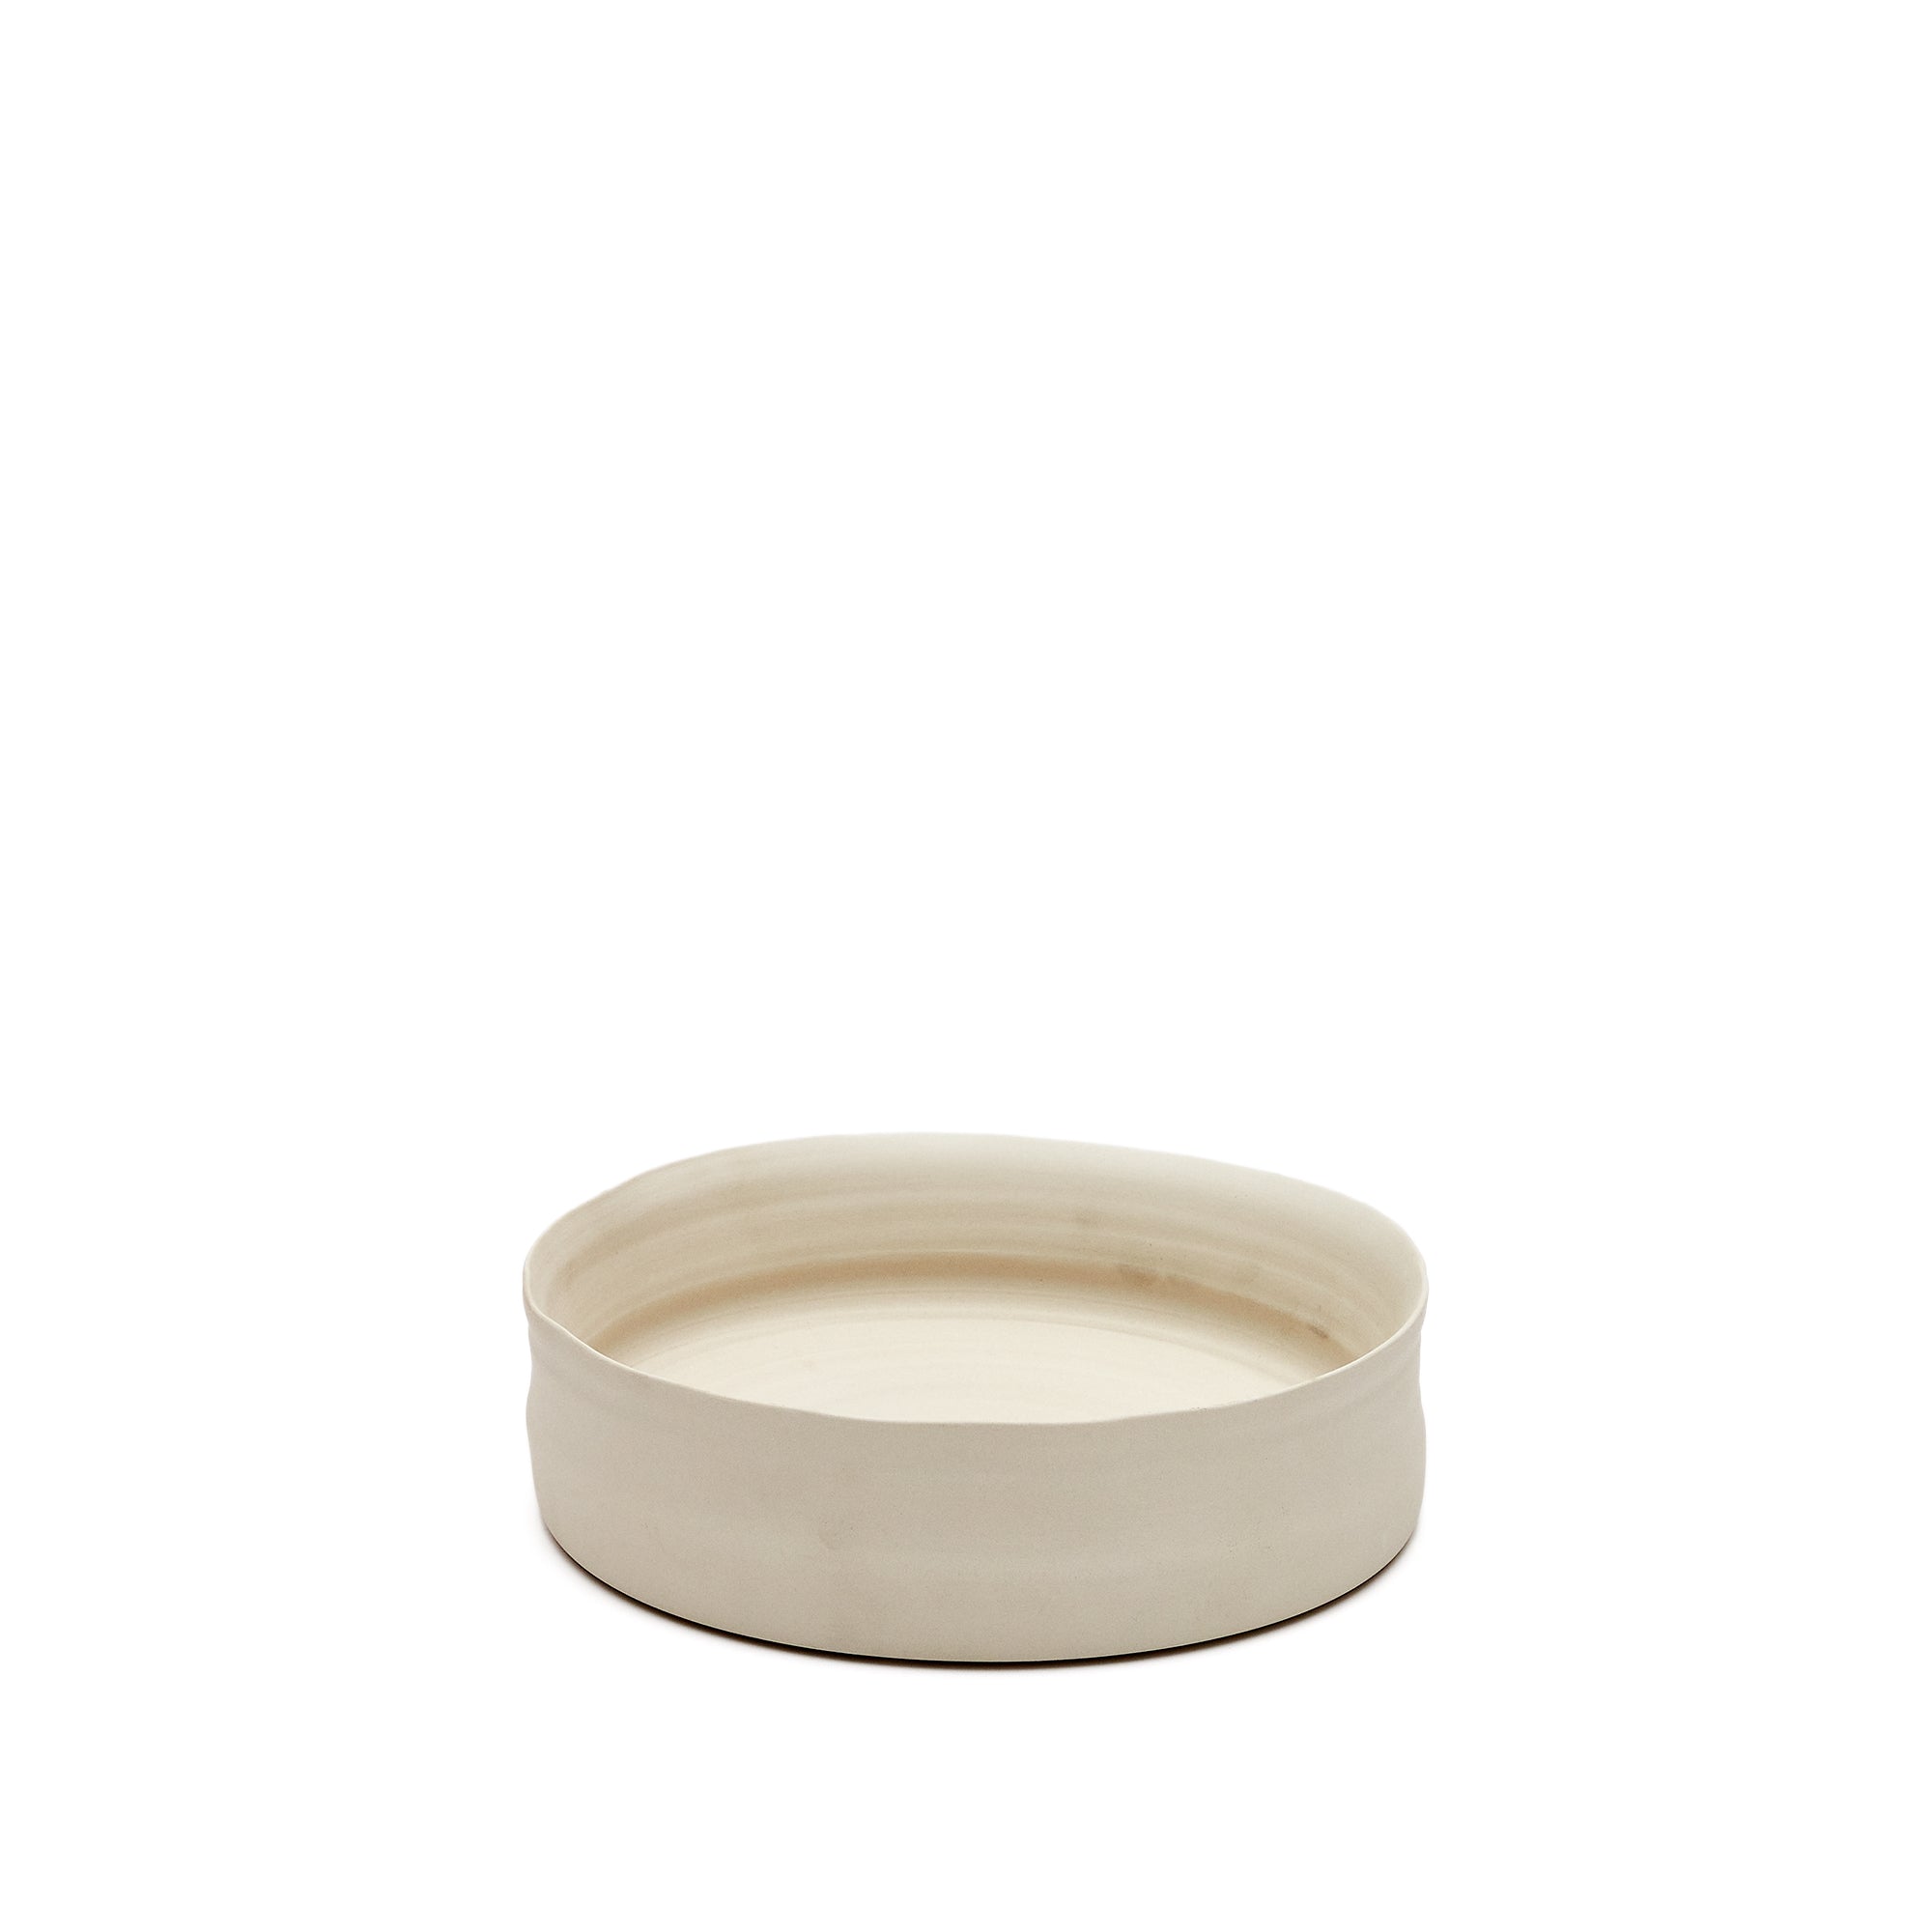 Macae small white ceramic centrepiece Ø 24 cm